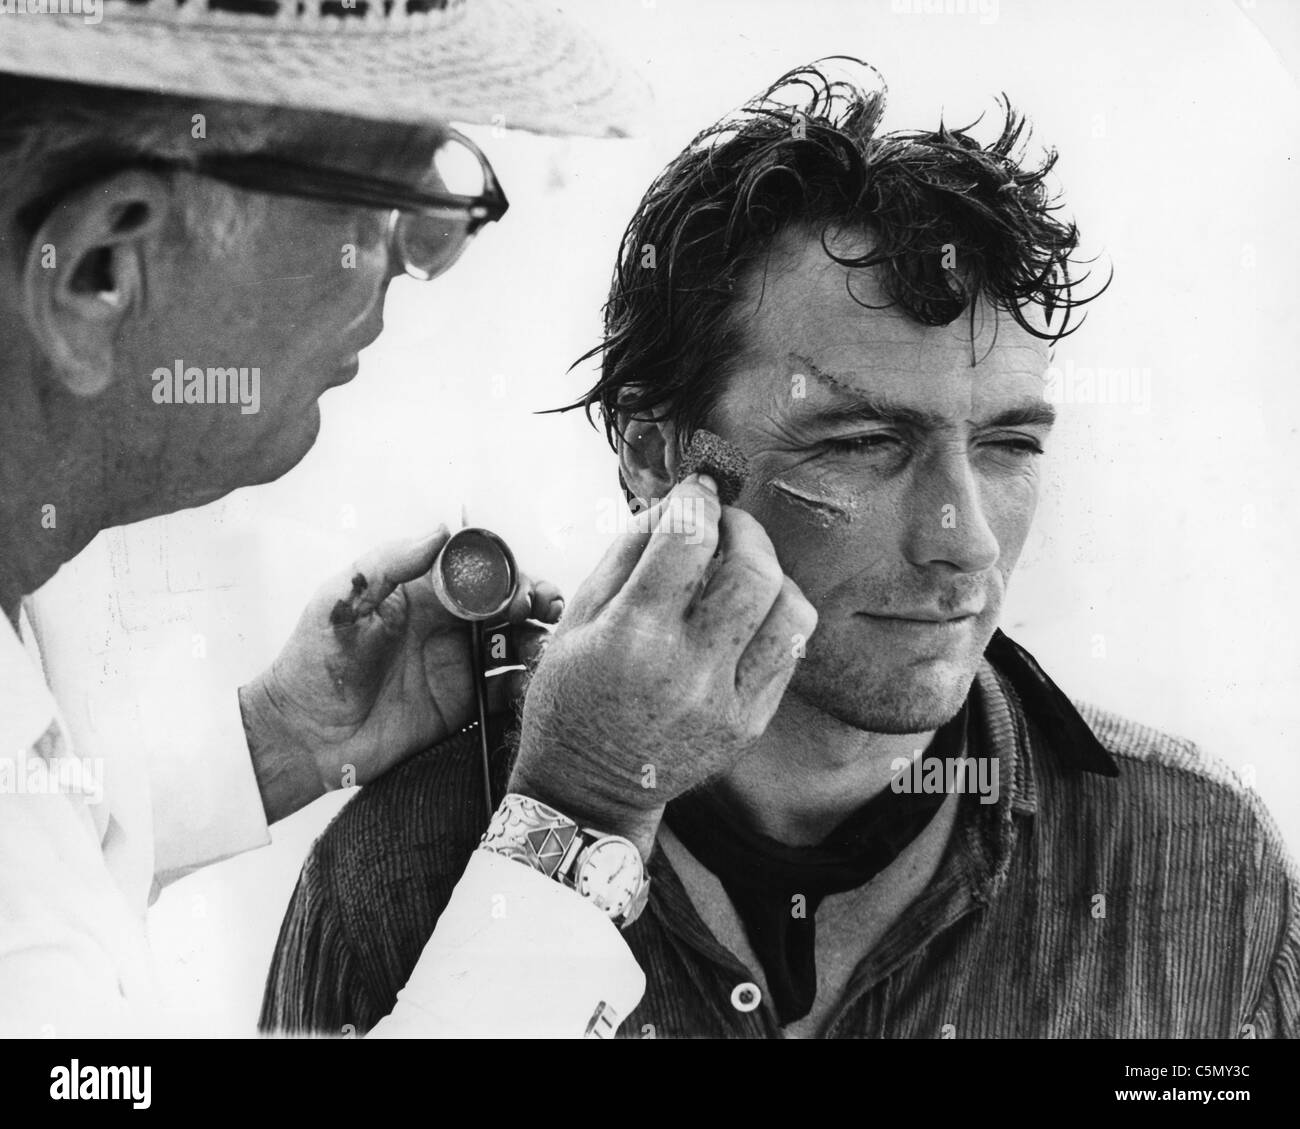 CLINT EASTWOOD in Make-up für die 1968 Film "Hang em High". Foto J Barry Herron Stockfoto